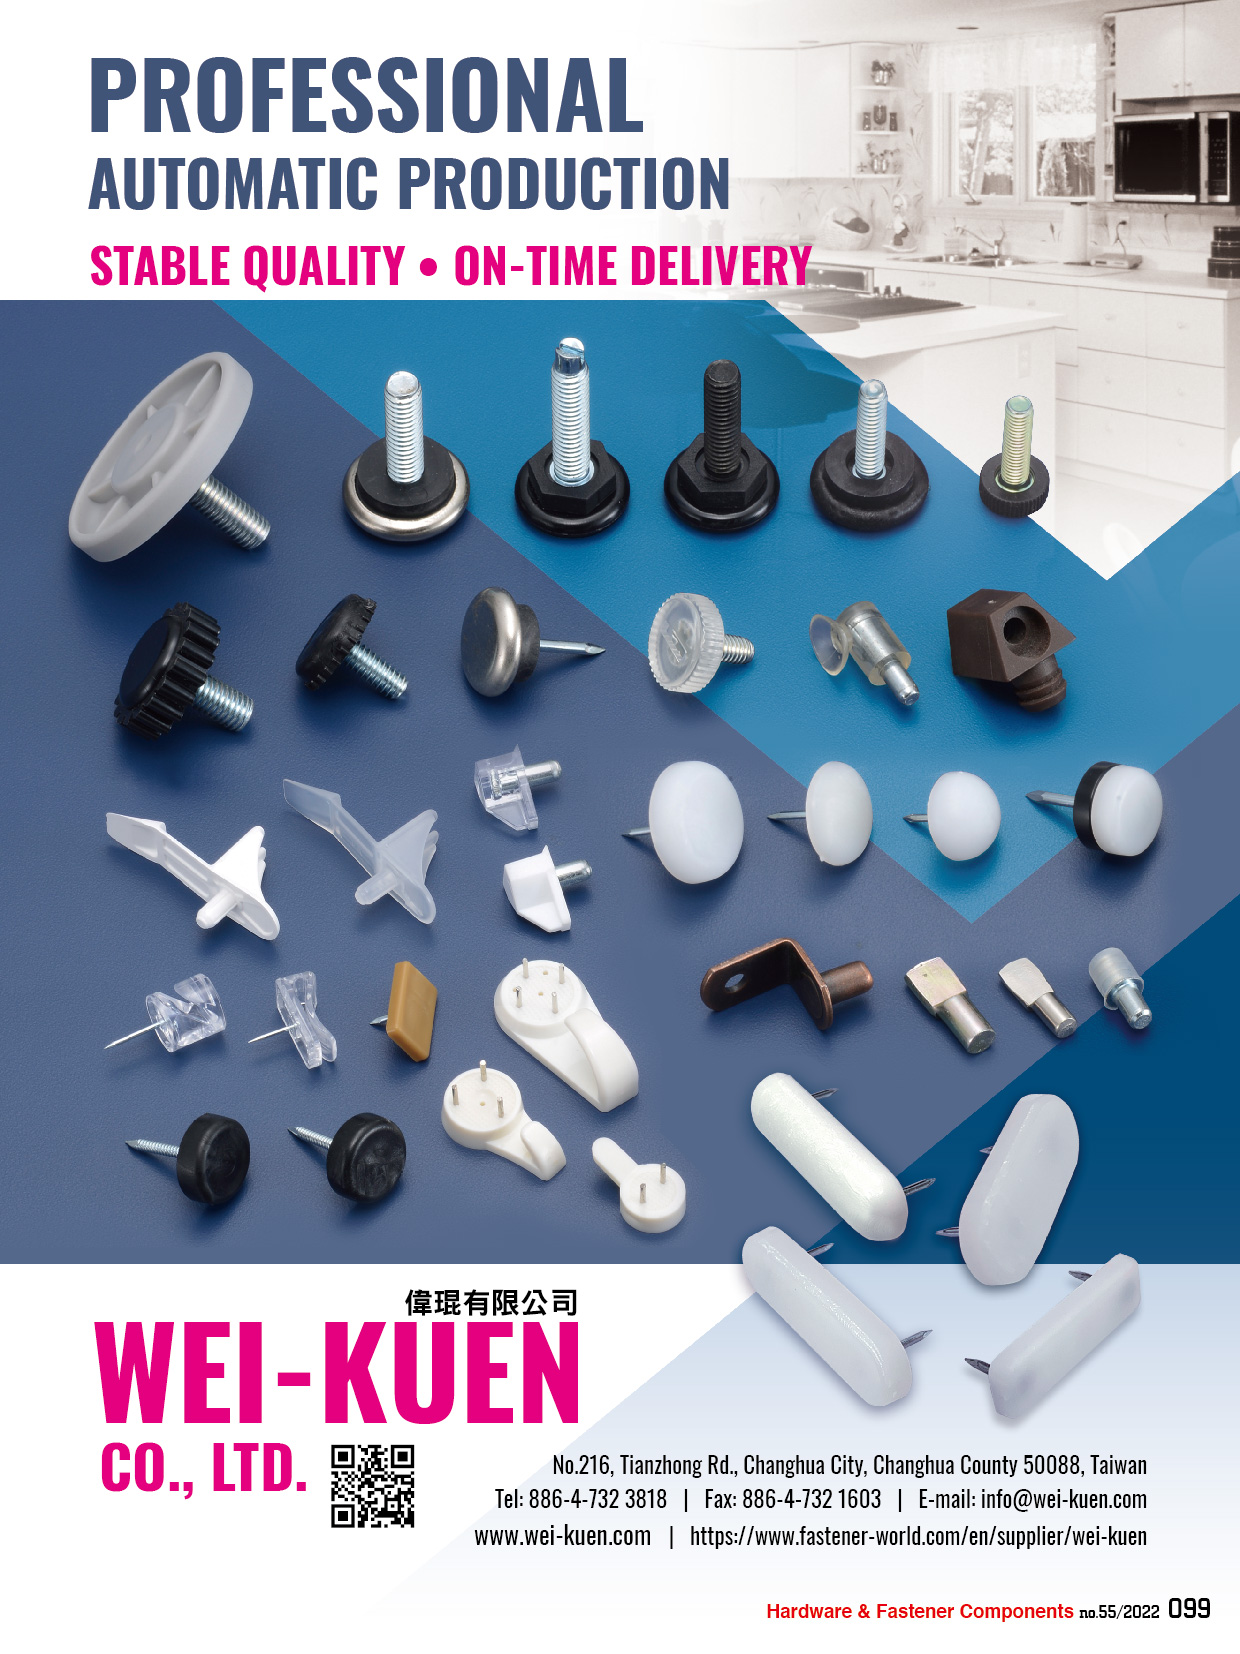 WEI-KUEN CO., LTD. , Nail Glide, Adjustment Screws, Shelf Support, Hooks, Dorstop/Foot Pad, Others